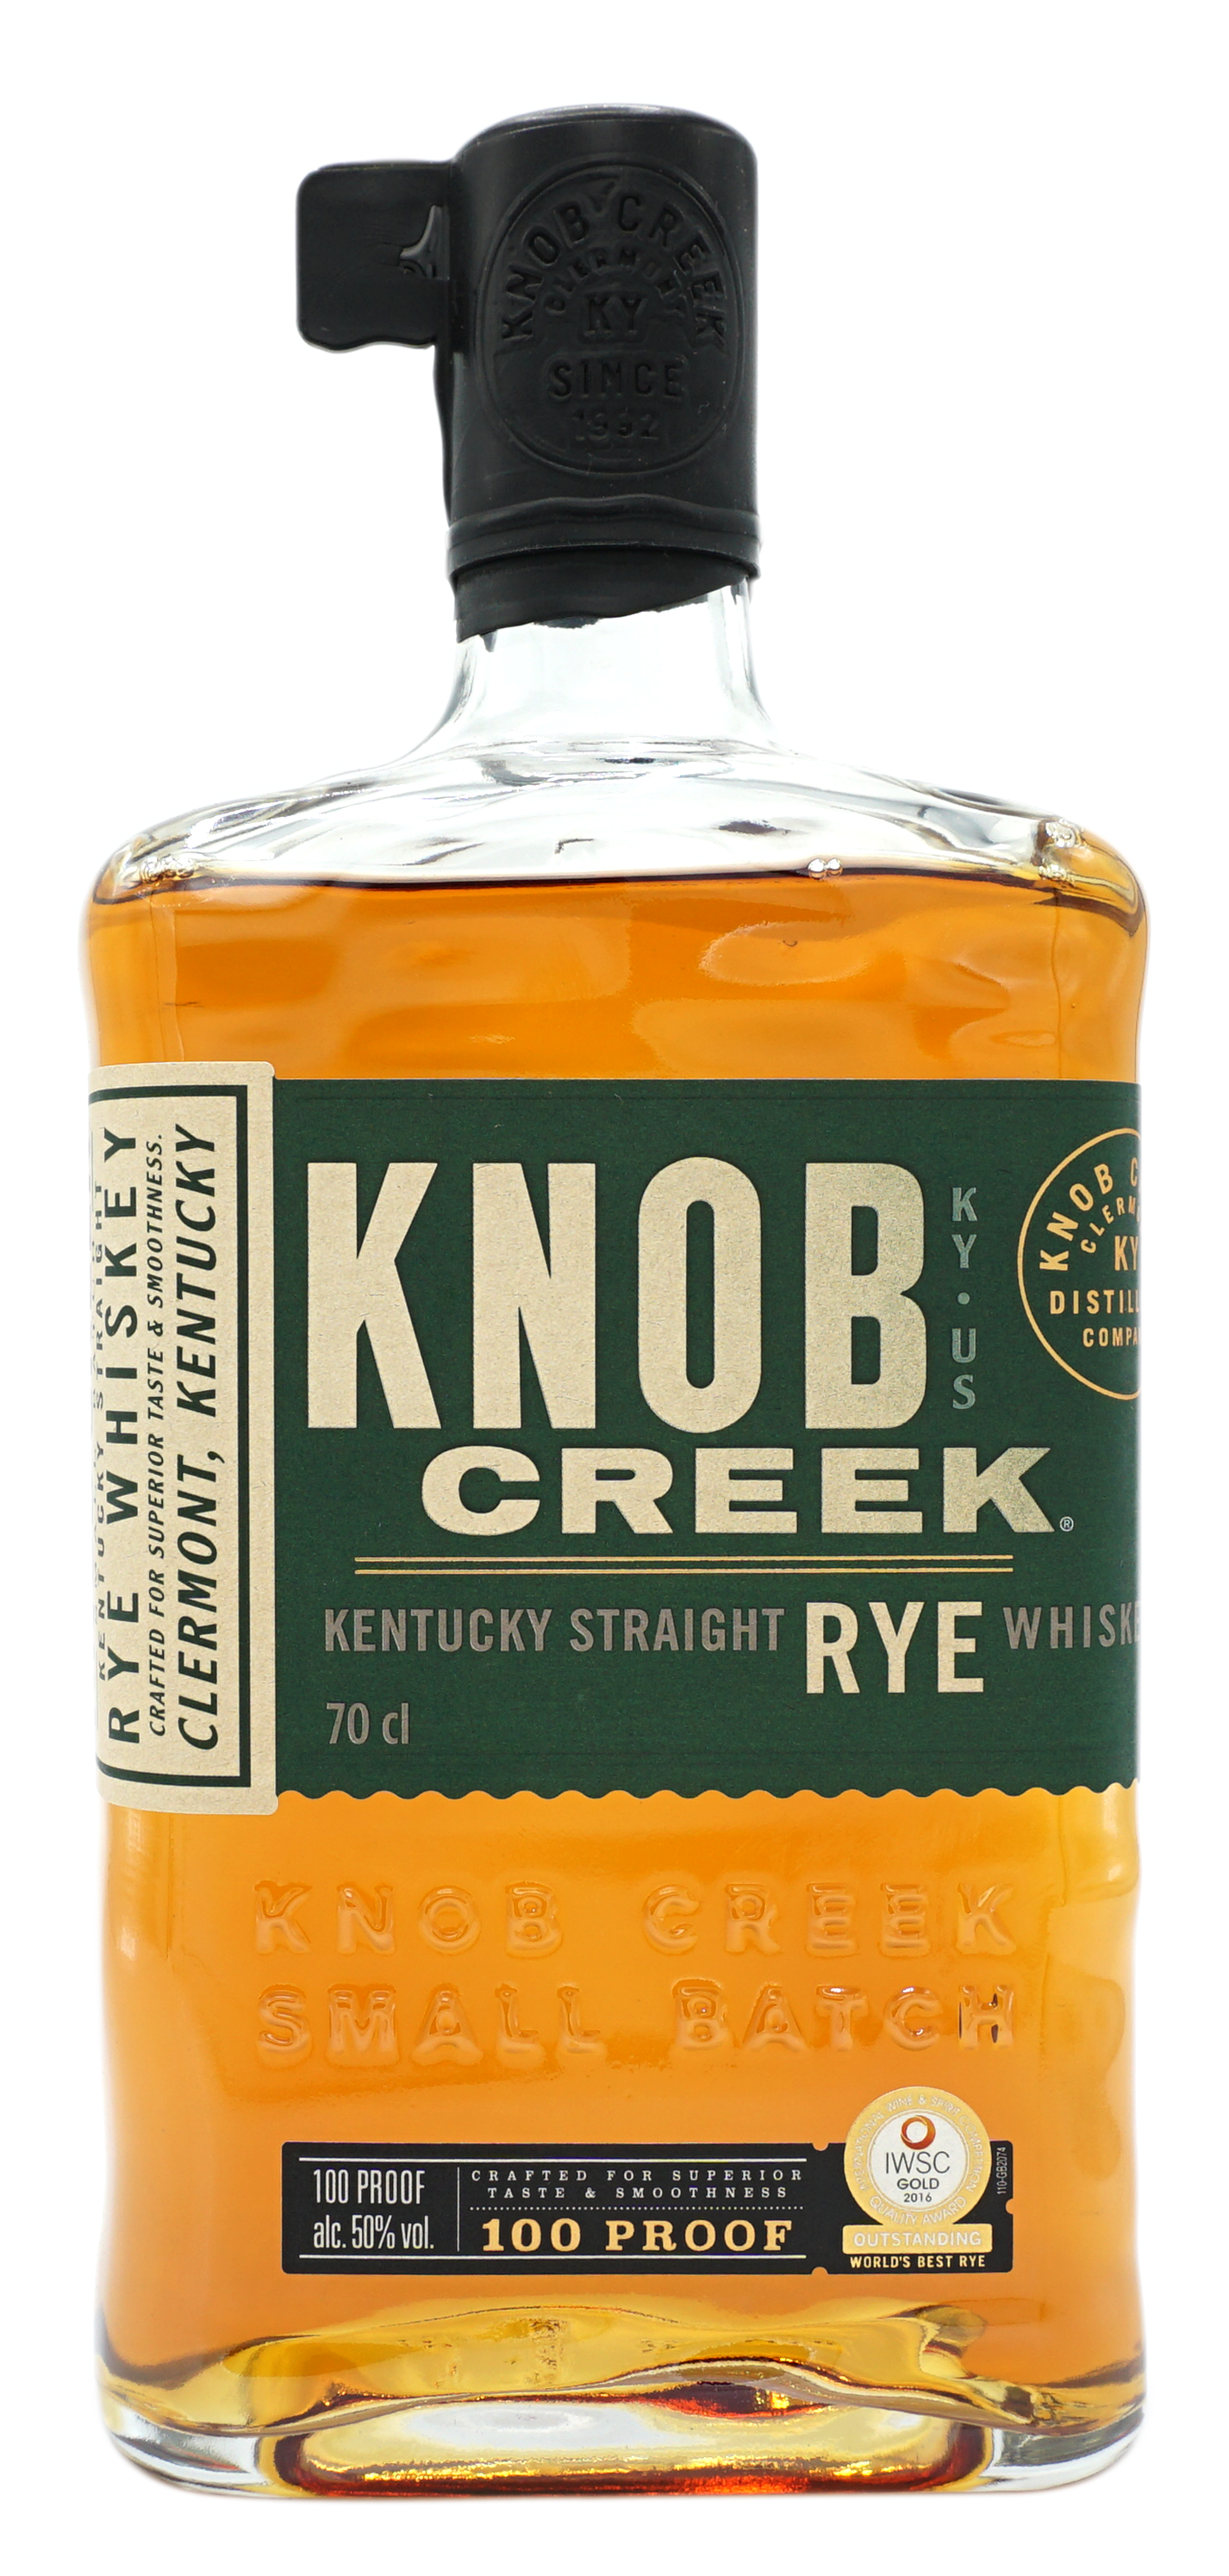 KnobCreek KentuckyStraigtRyeWhisky 50% Fles